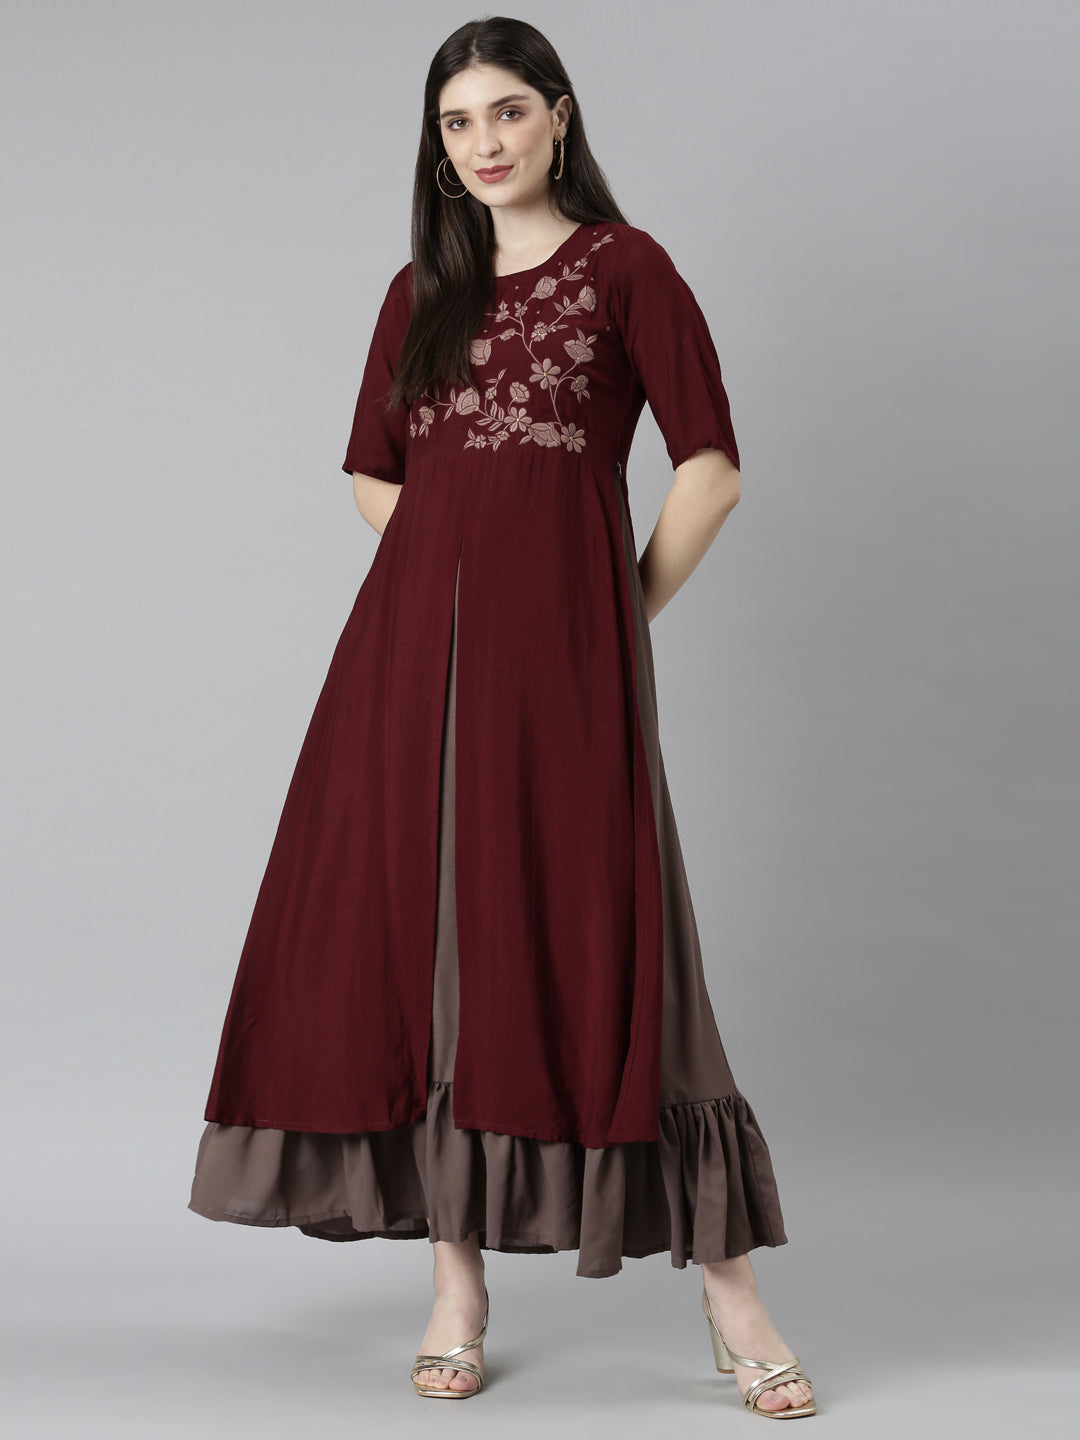 Neeru's Brown Straight Casual Floral Dresses